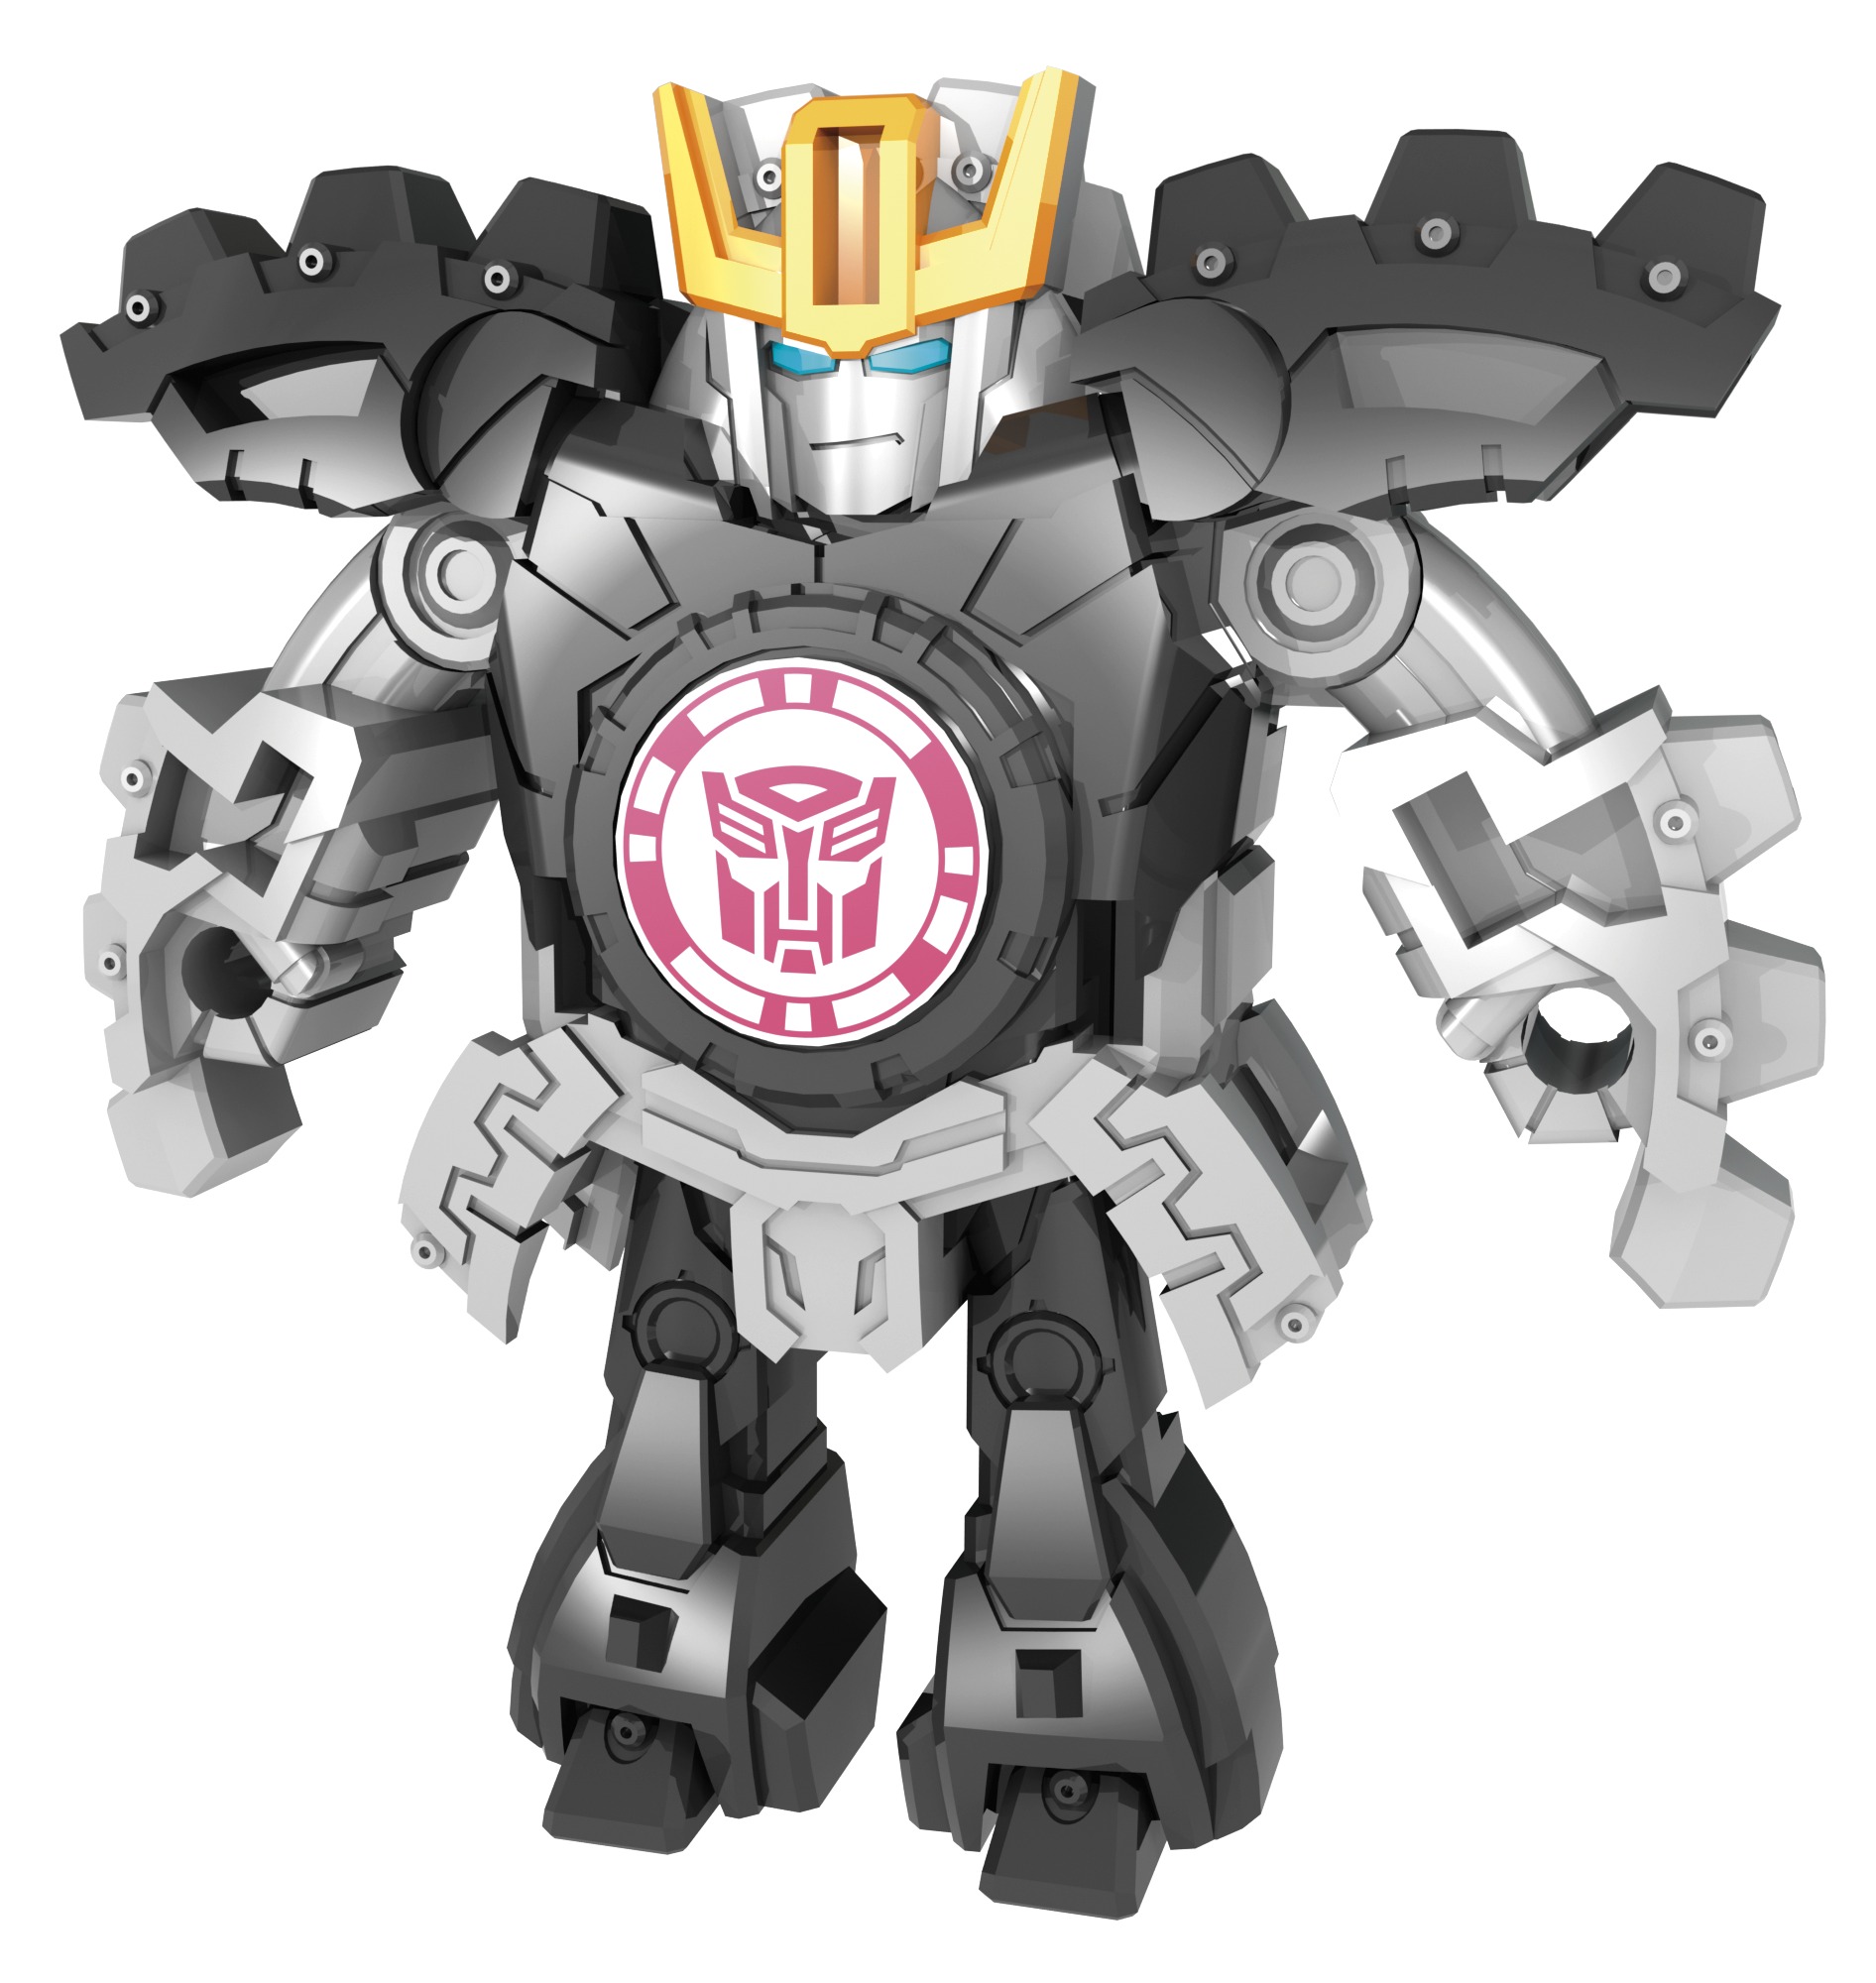 Код transformers. Transformers Robots in Disguise коды. Трансформеры коды сканировать. Transformers Robots in Disguise сканировать значки. Transformers Robots in Disguise 2015.